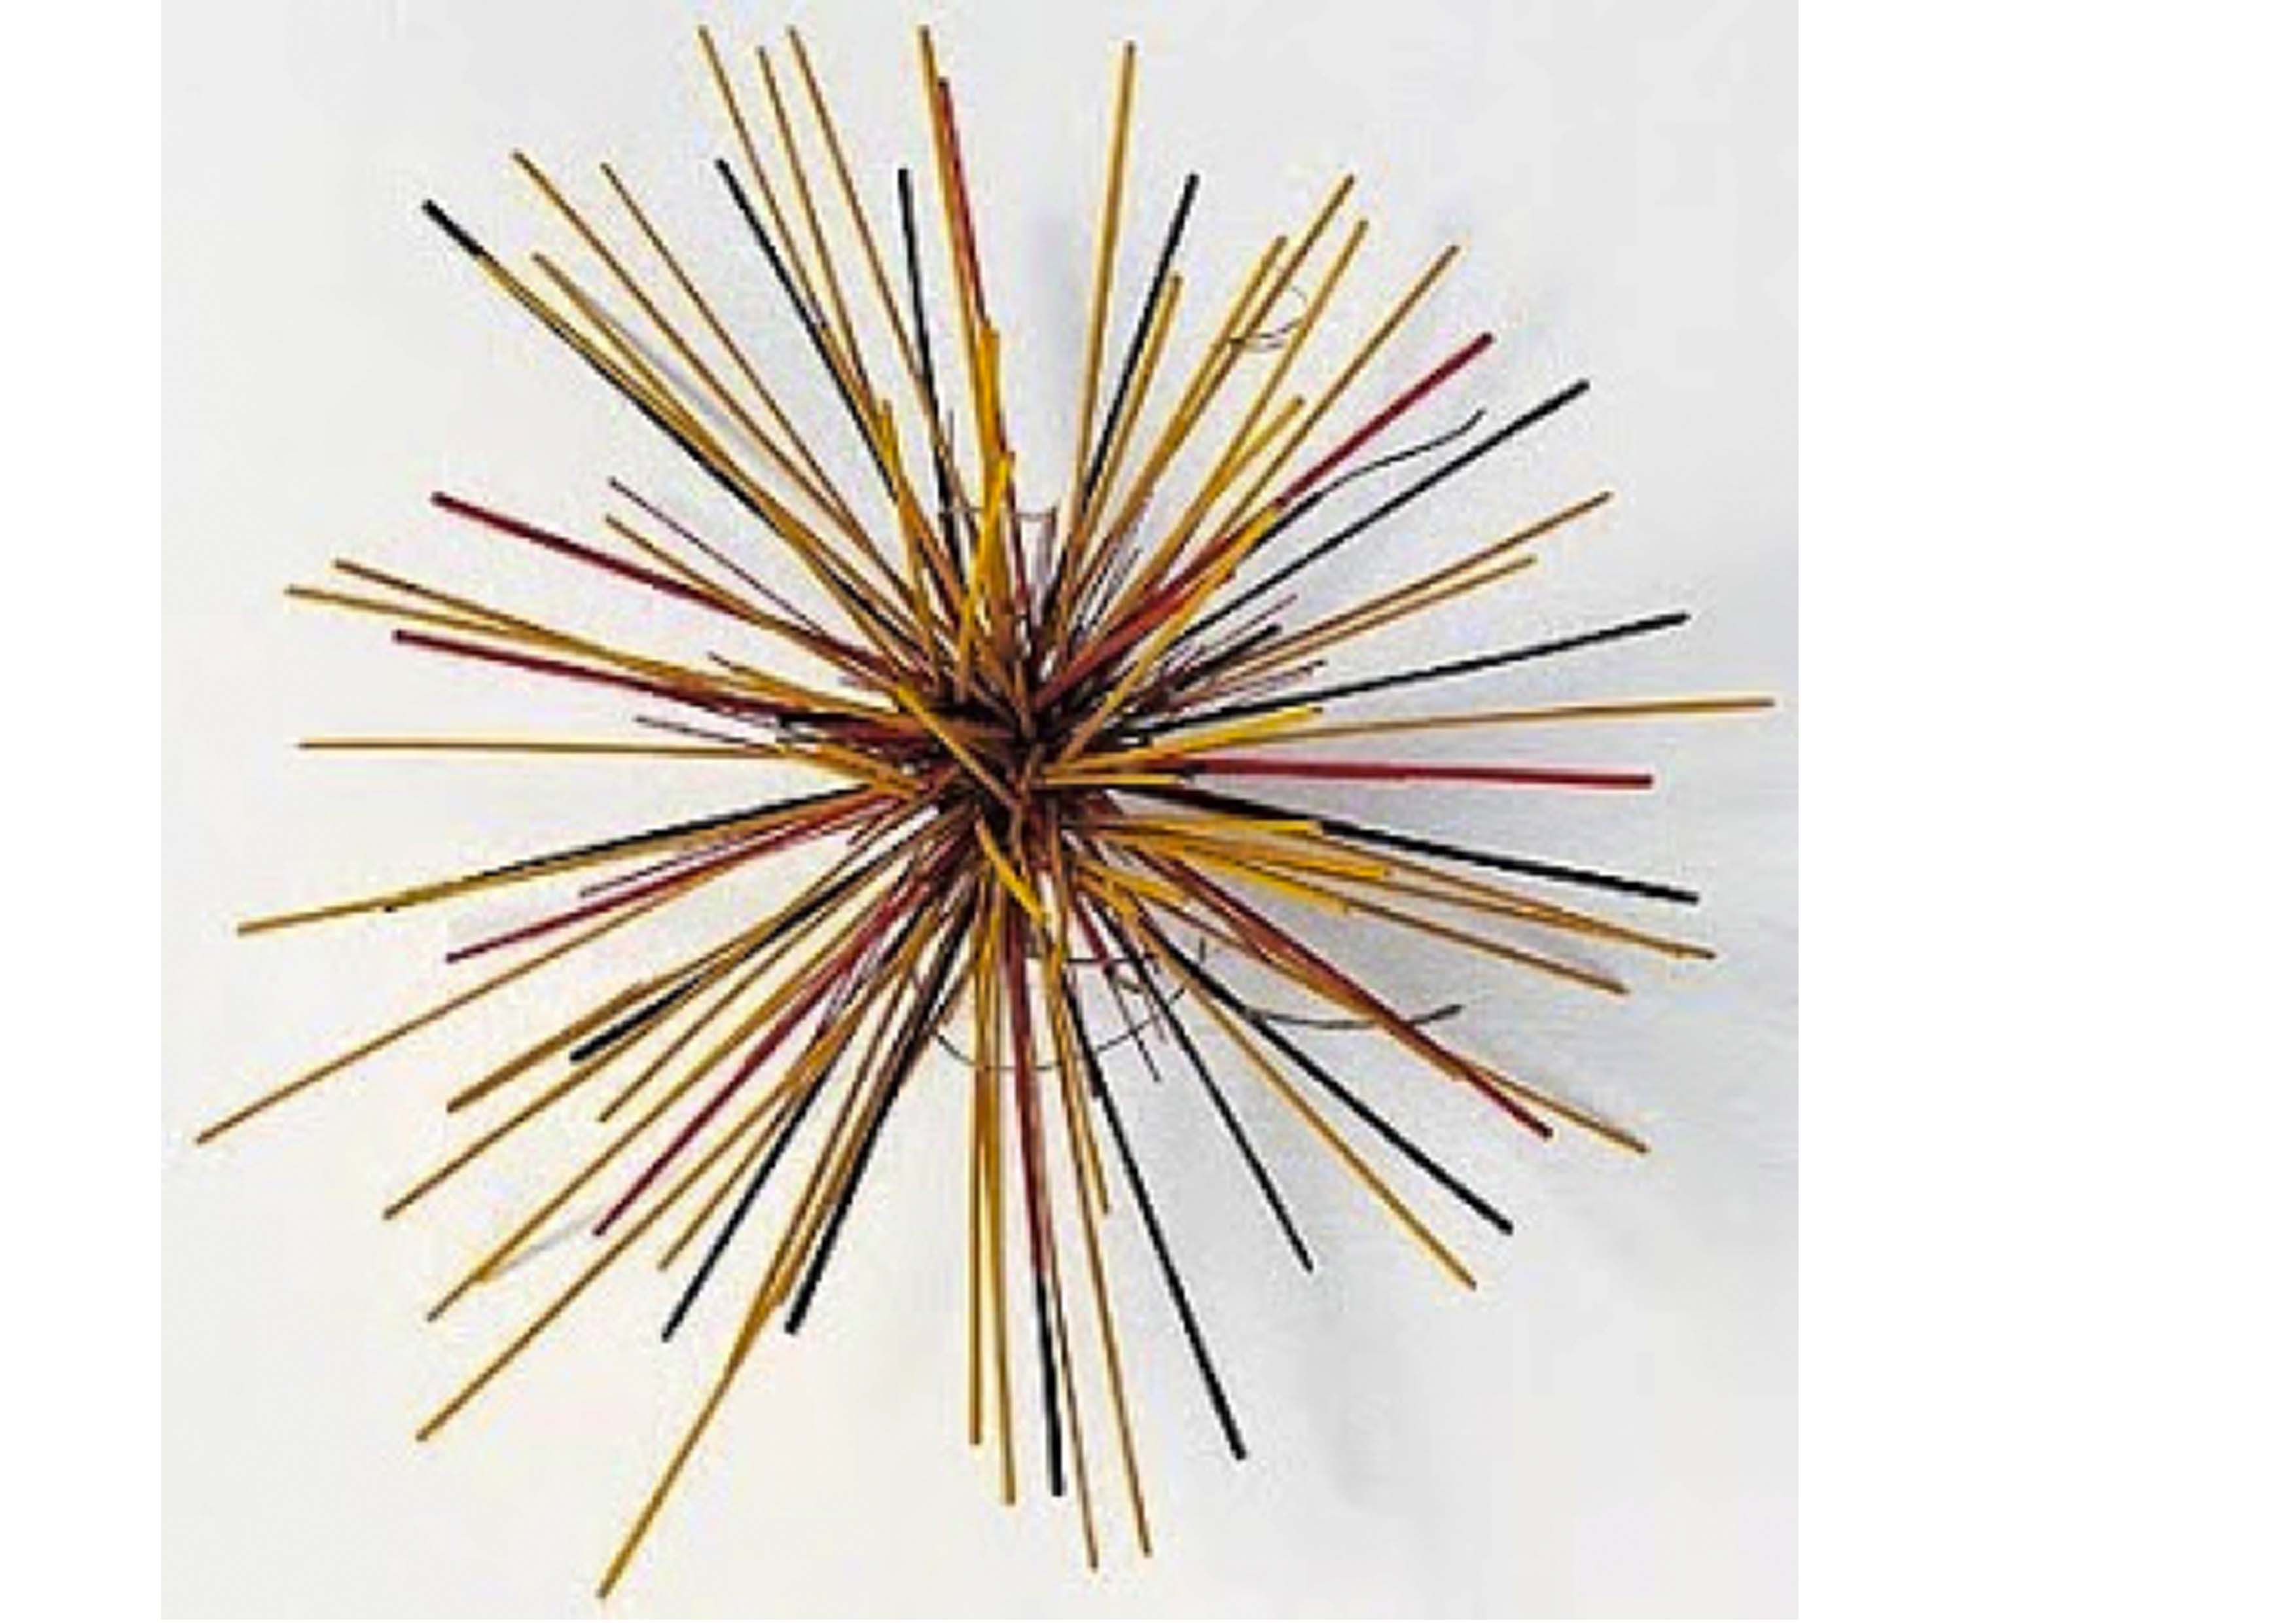 Eva Rothschild, Disappearer, Incense sticks, 2001